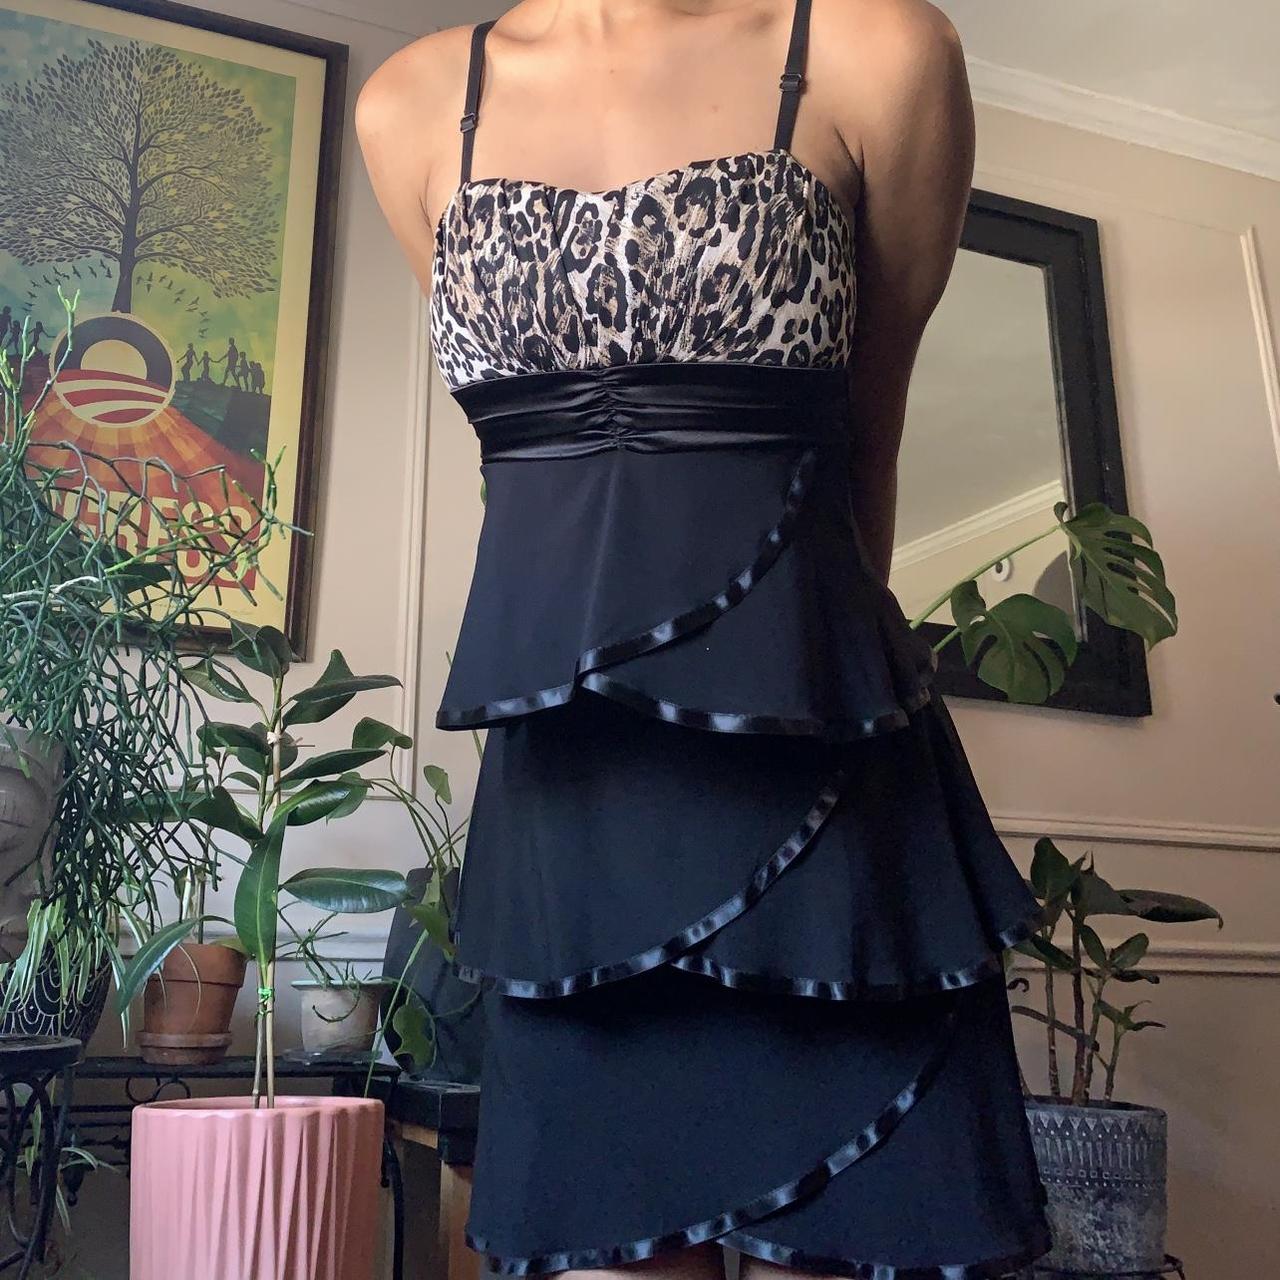 Product Image 2 - Black ruffled dress with cheetah